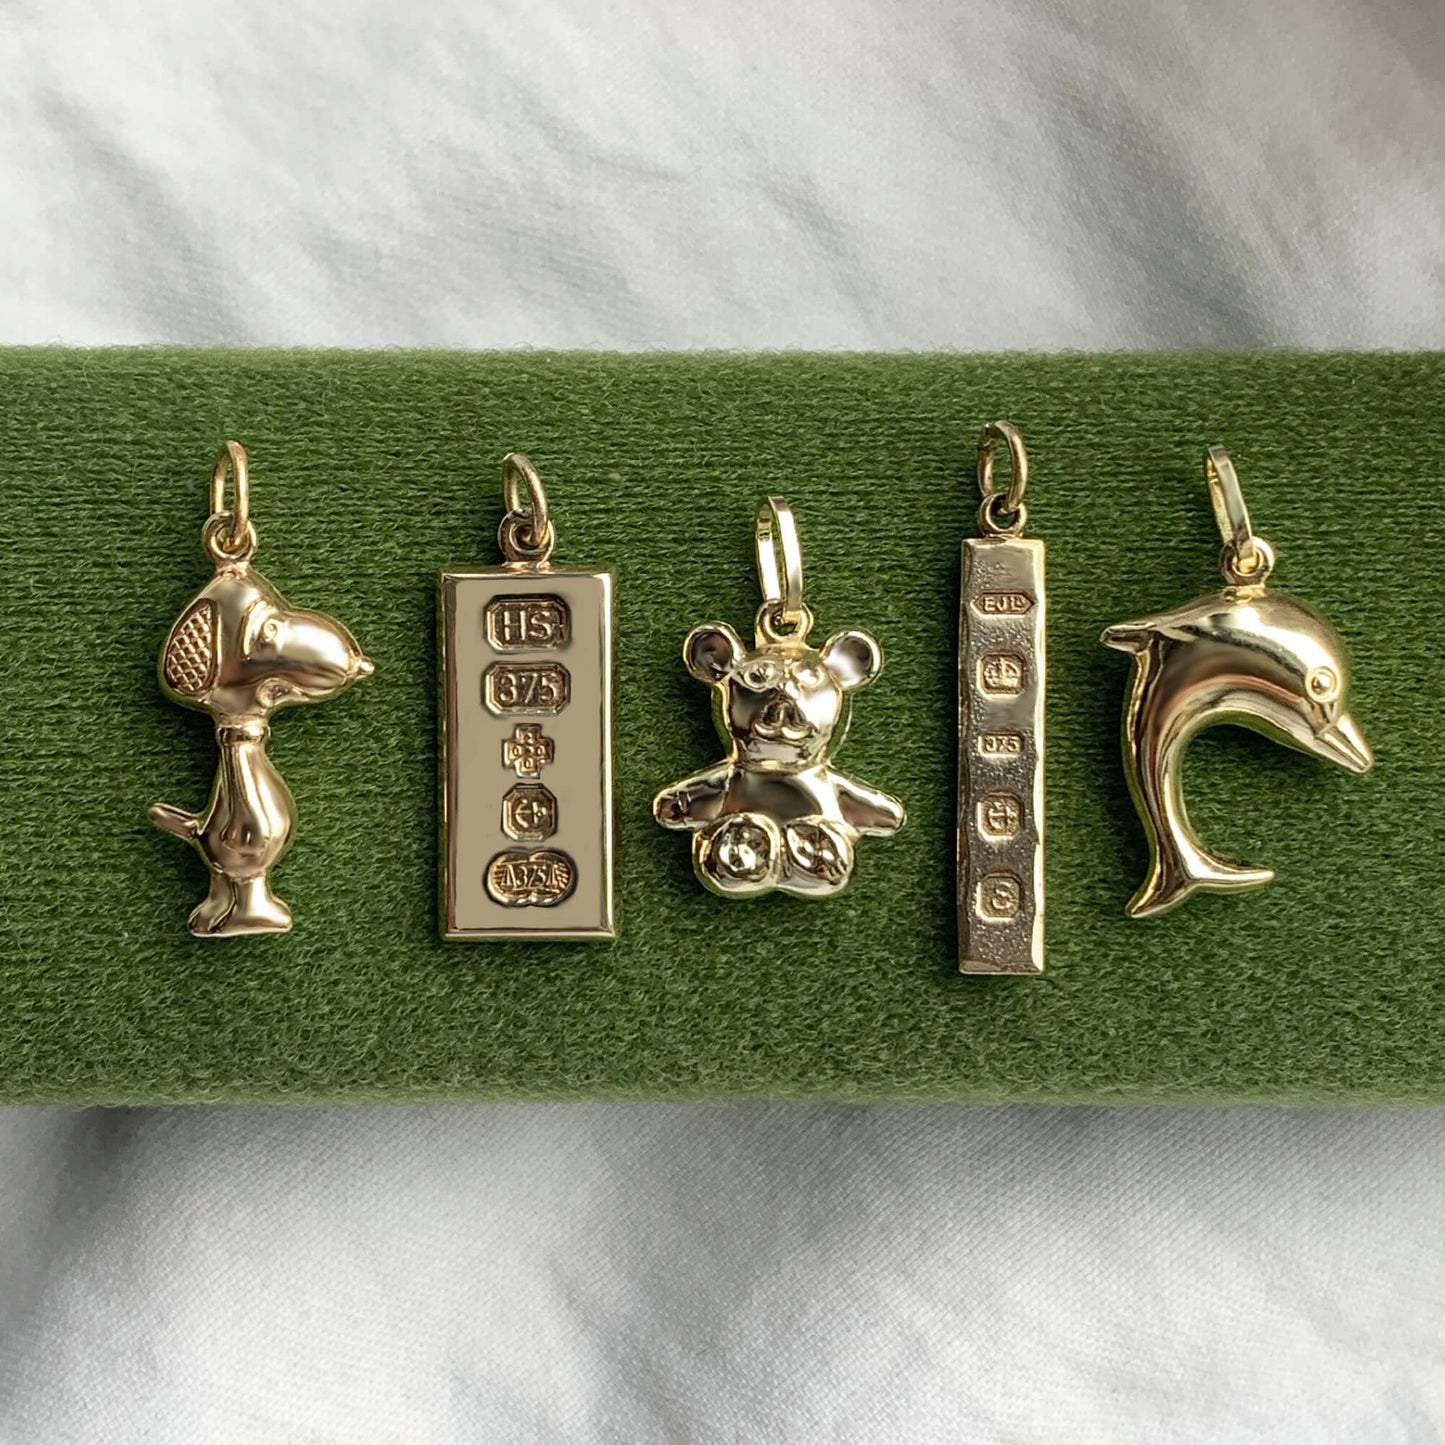 5 gold charms on a green jewellery box- left to right snoopy, millennium ingot, teddy bear, slim ingot, dolphin ingot.